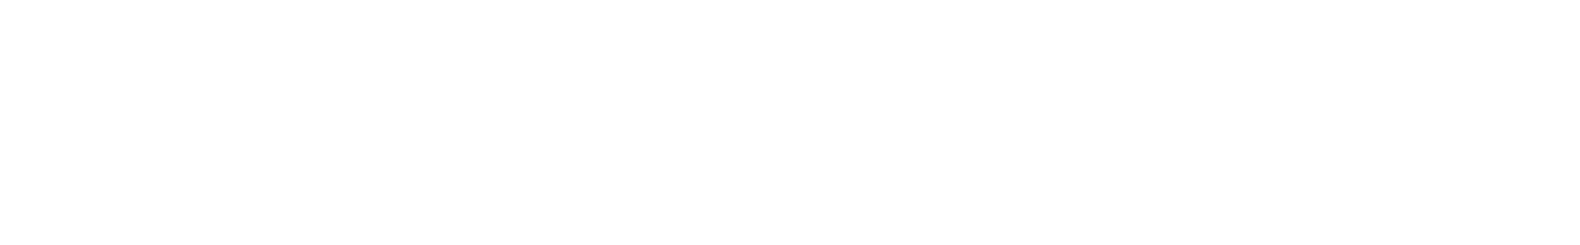 Prada Logo groß für dunkle Hintergründe (transparentes PNG)